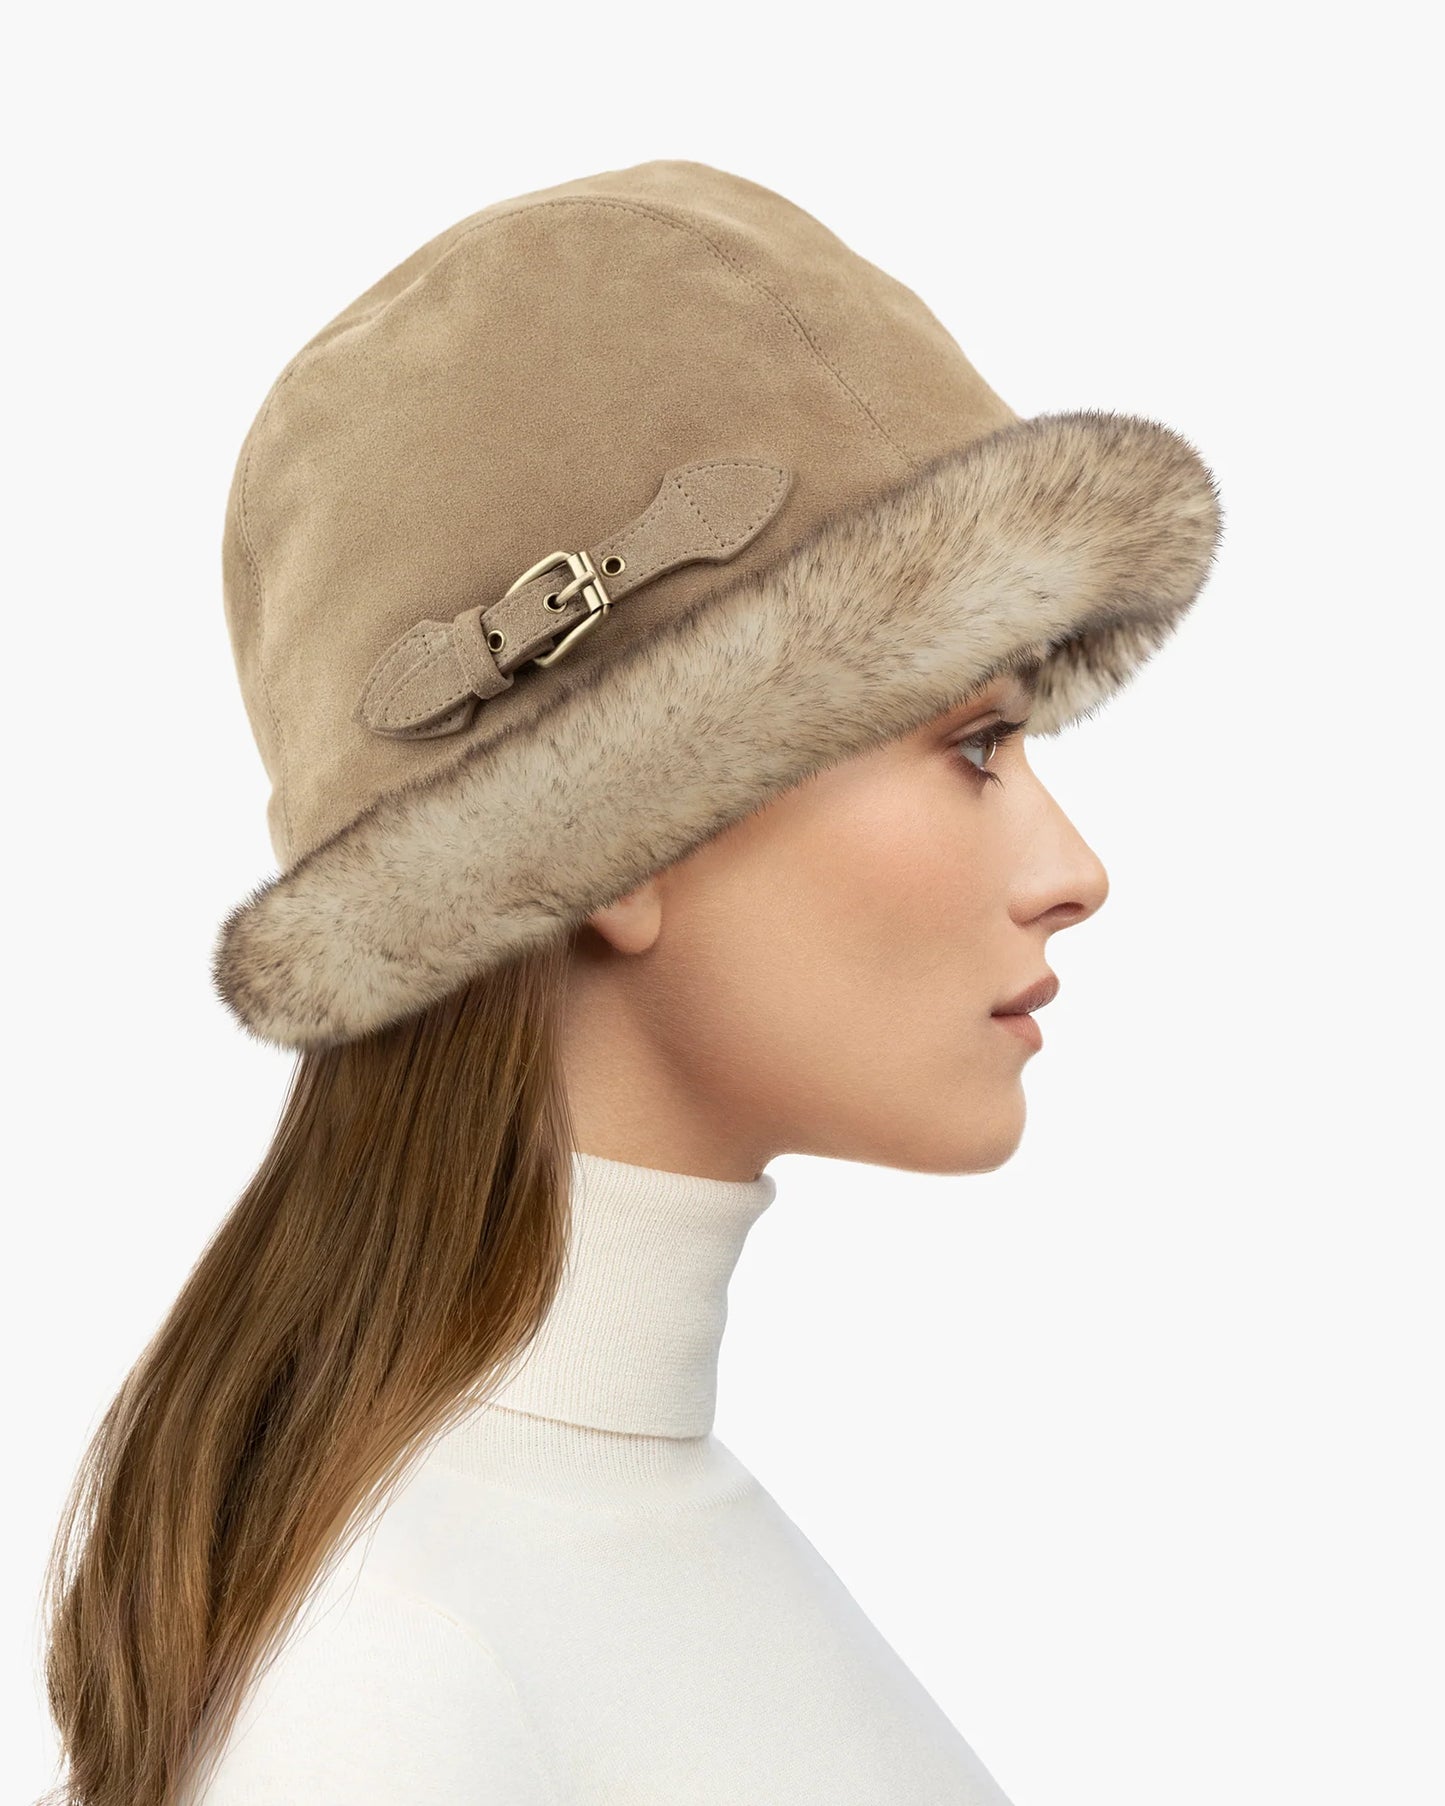 Vail Winter Hat